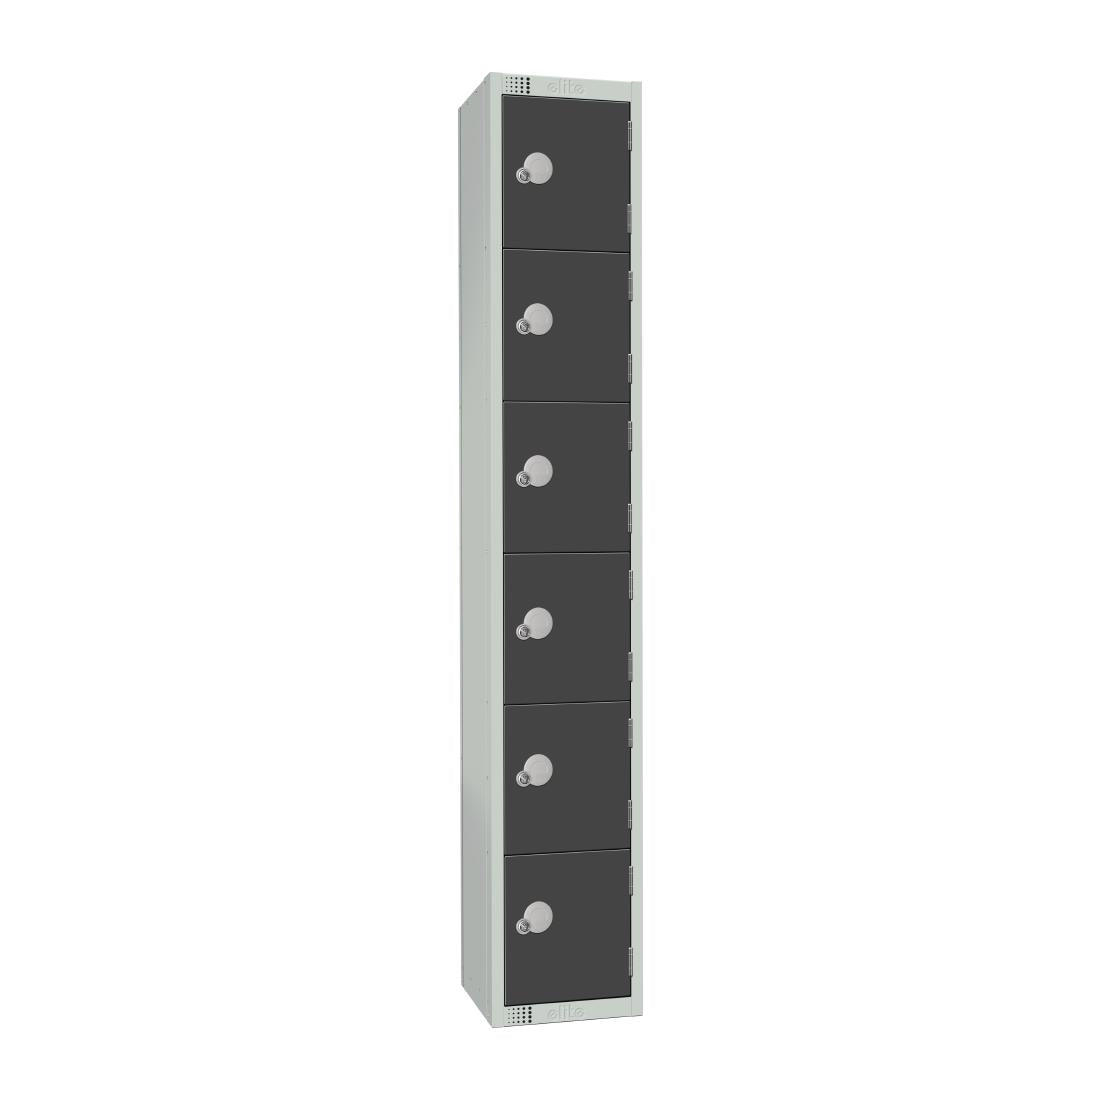 GR682-CL Elite Six Door Manual Combination Locker Locker Graphite Grey JD Catering Equipment Solutions Ltd